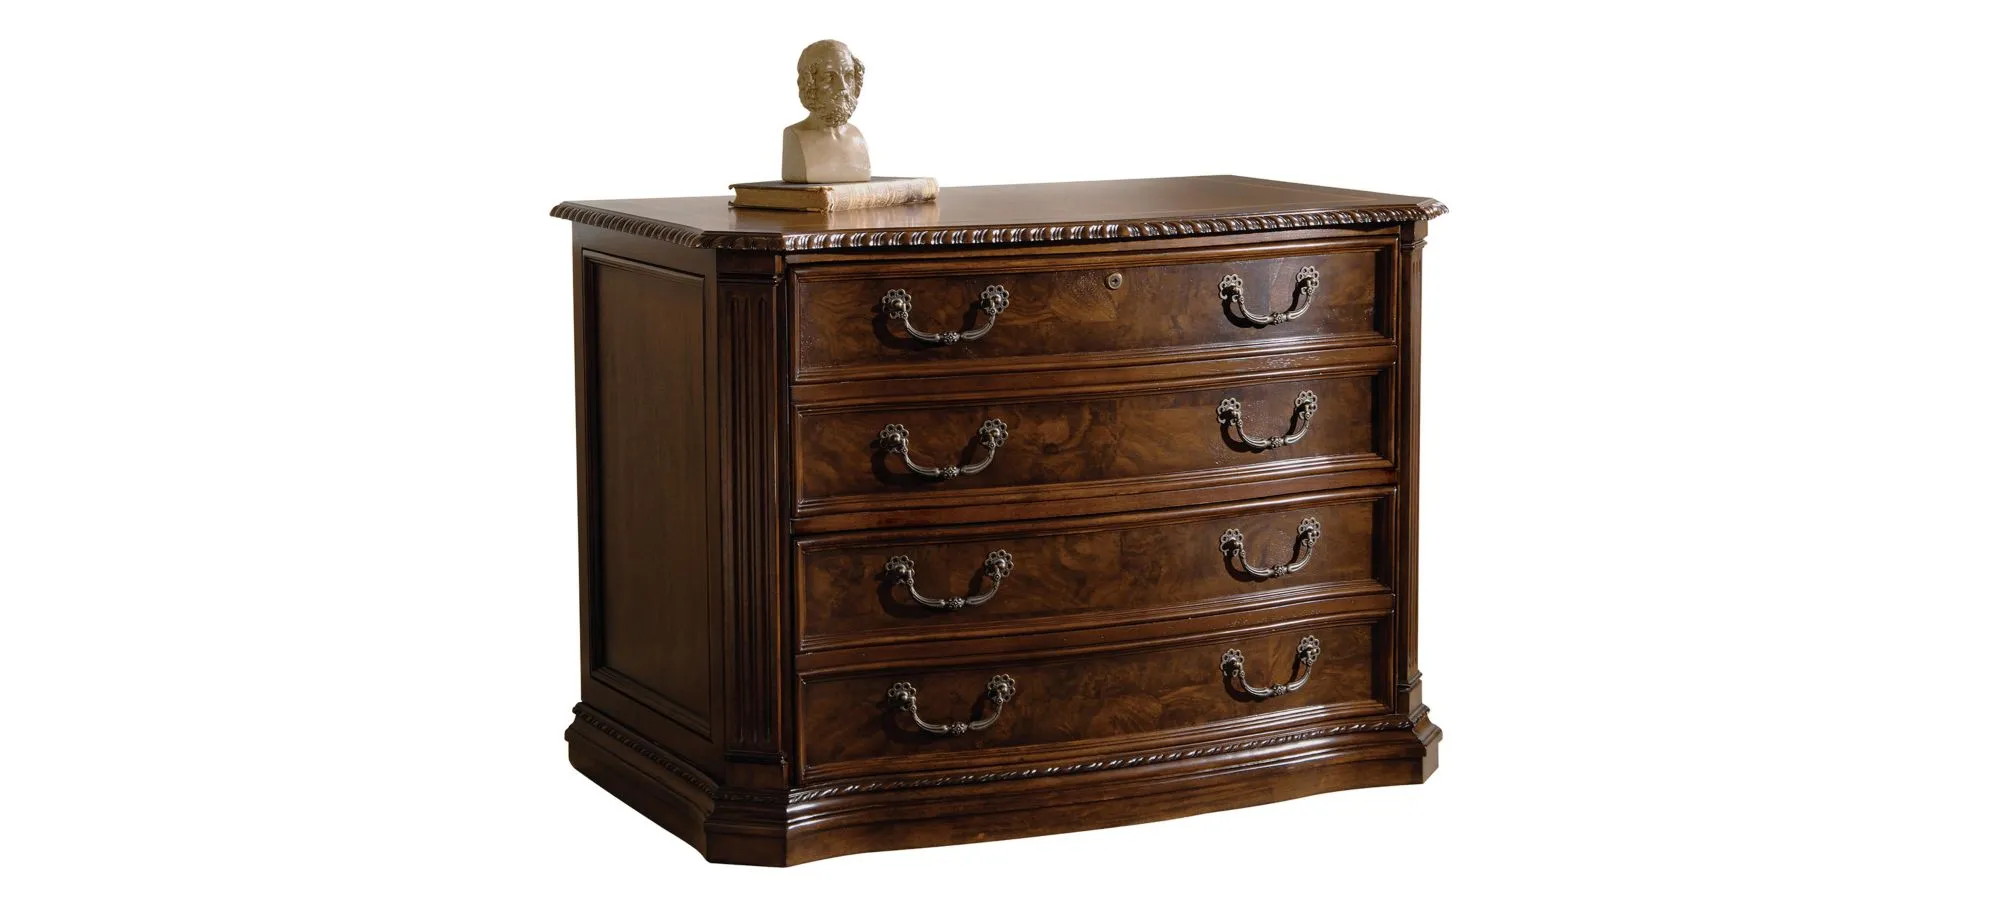 Hekman Executive File Cabinet in OLD WORLD WALNUT BURL by Hekman Furniture Company